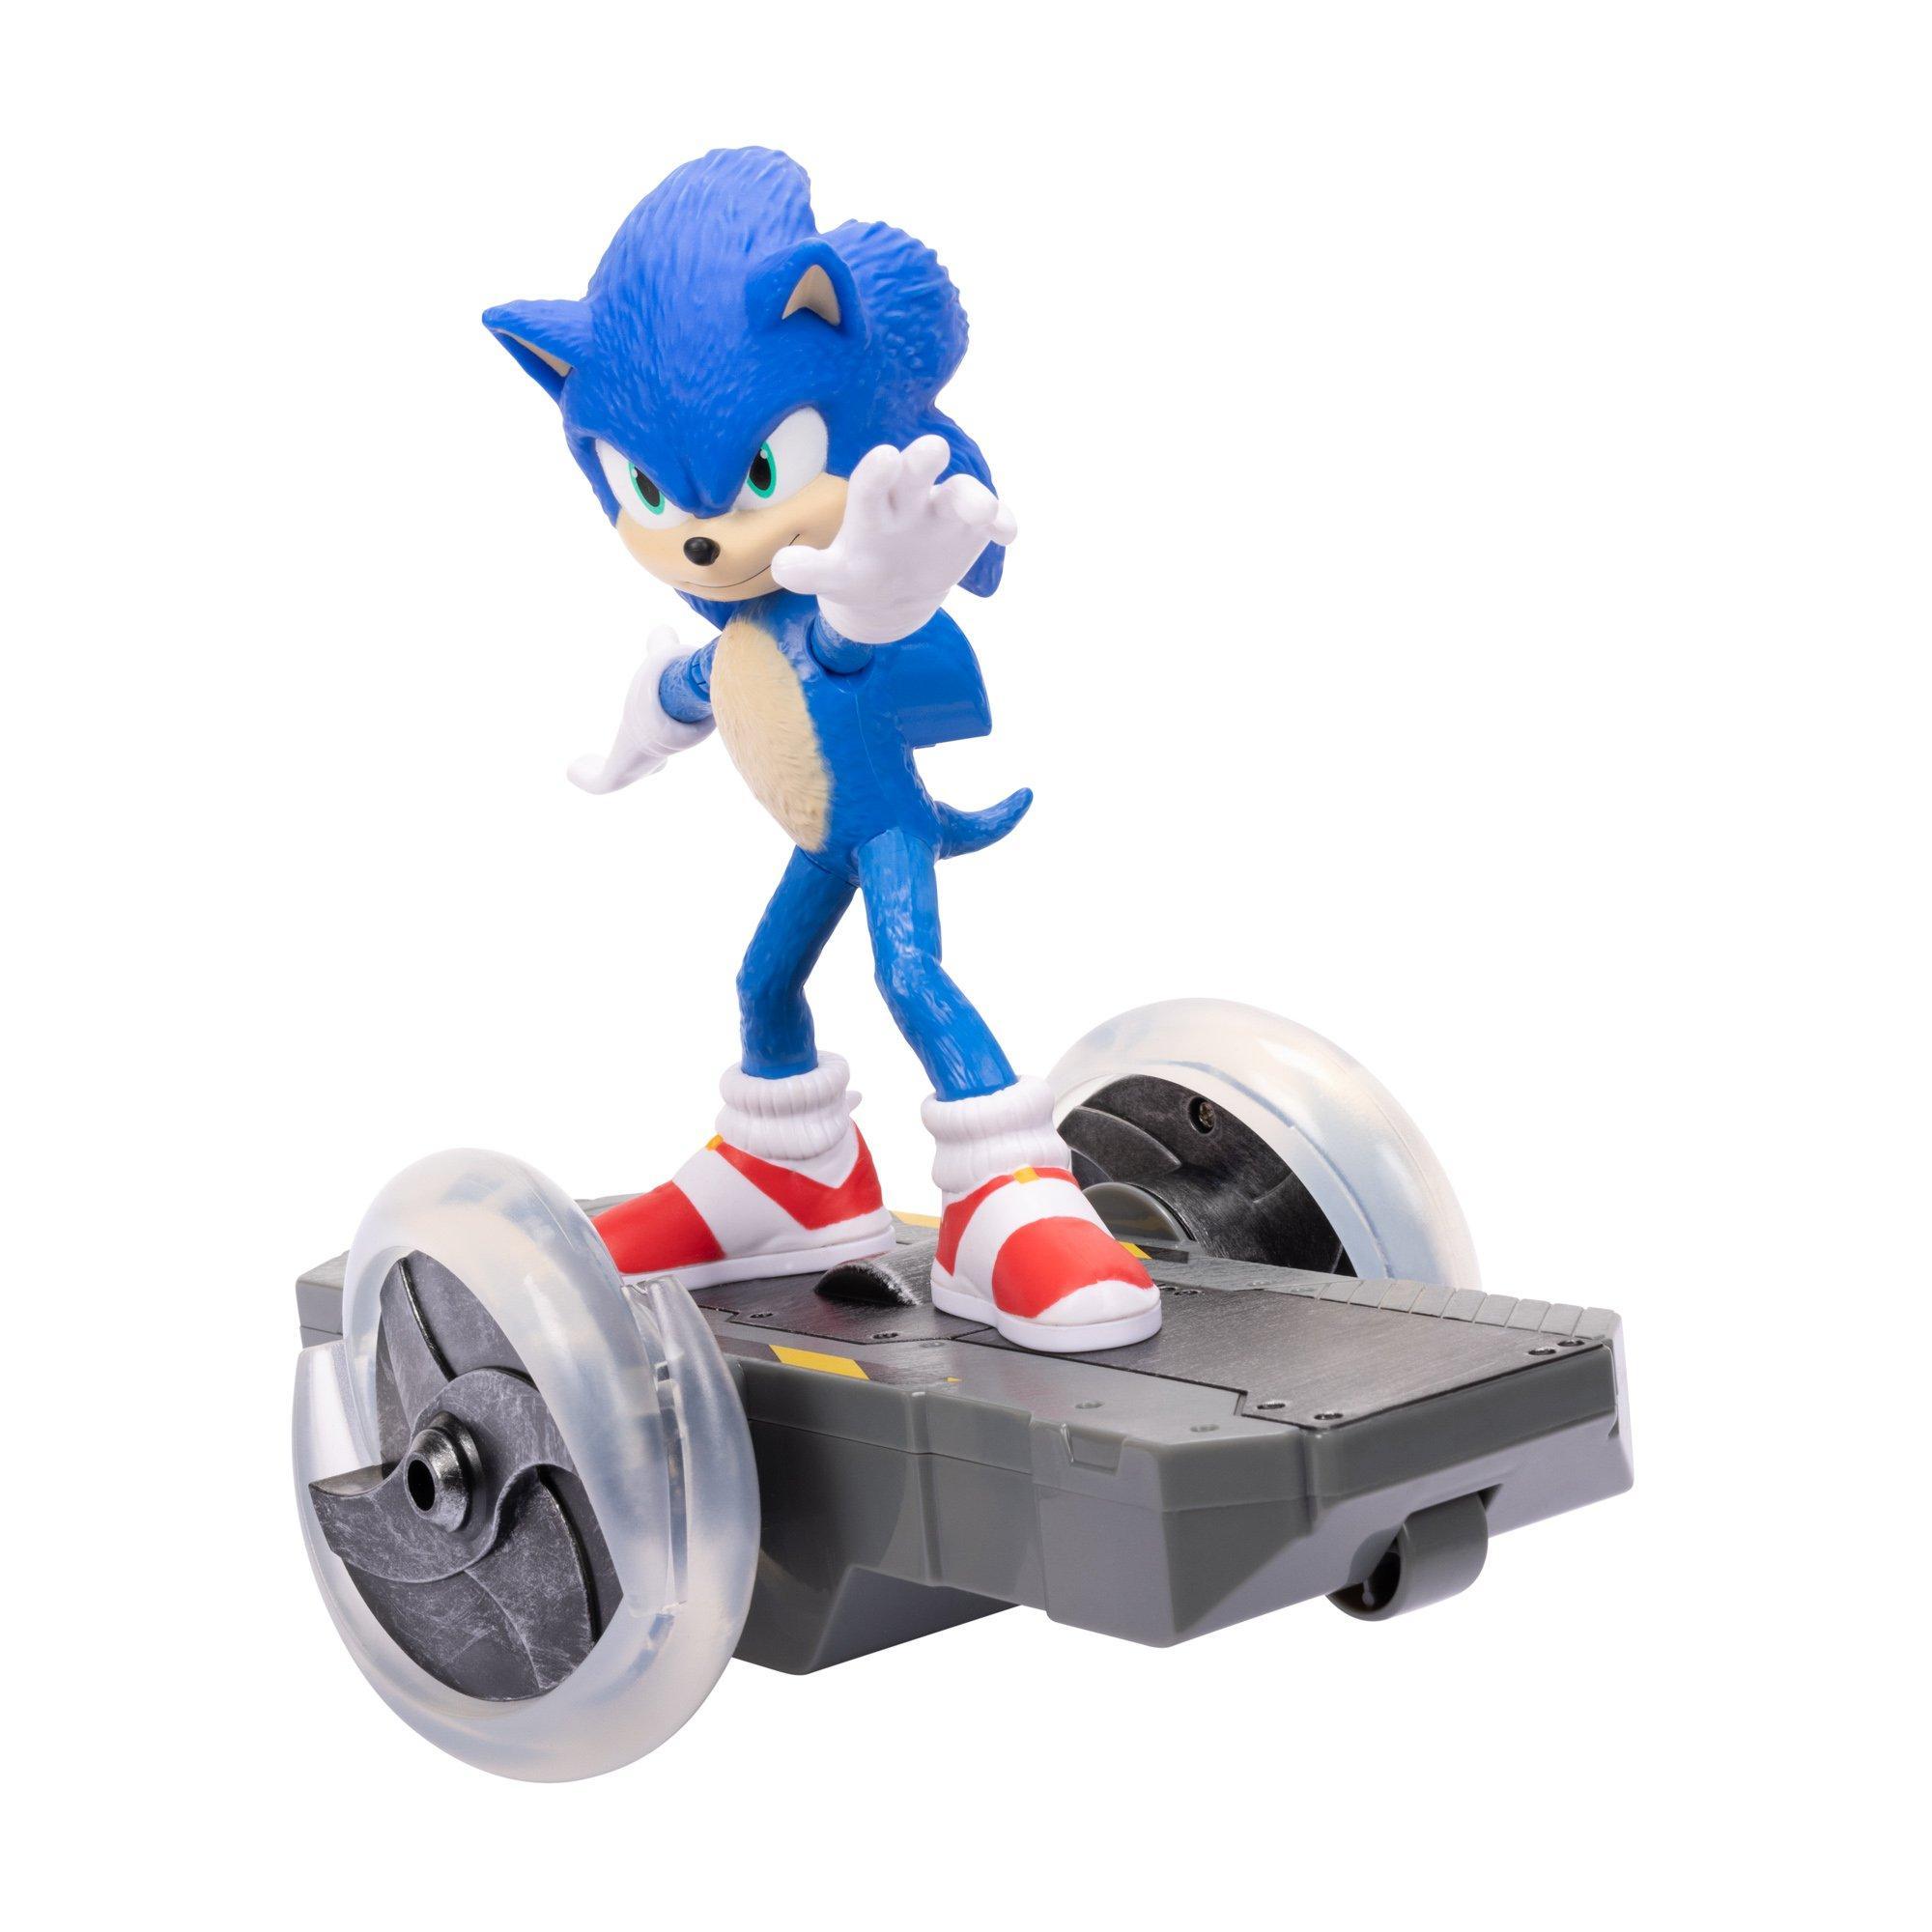 Remote Control Sonic The Hedgehog:  Developmental Benefits of the Remote Control Sonic Hedgehog